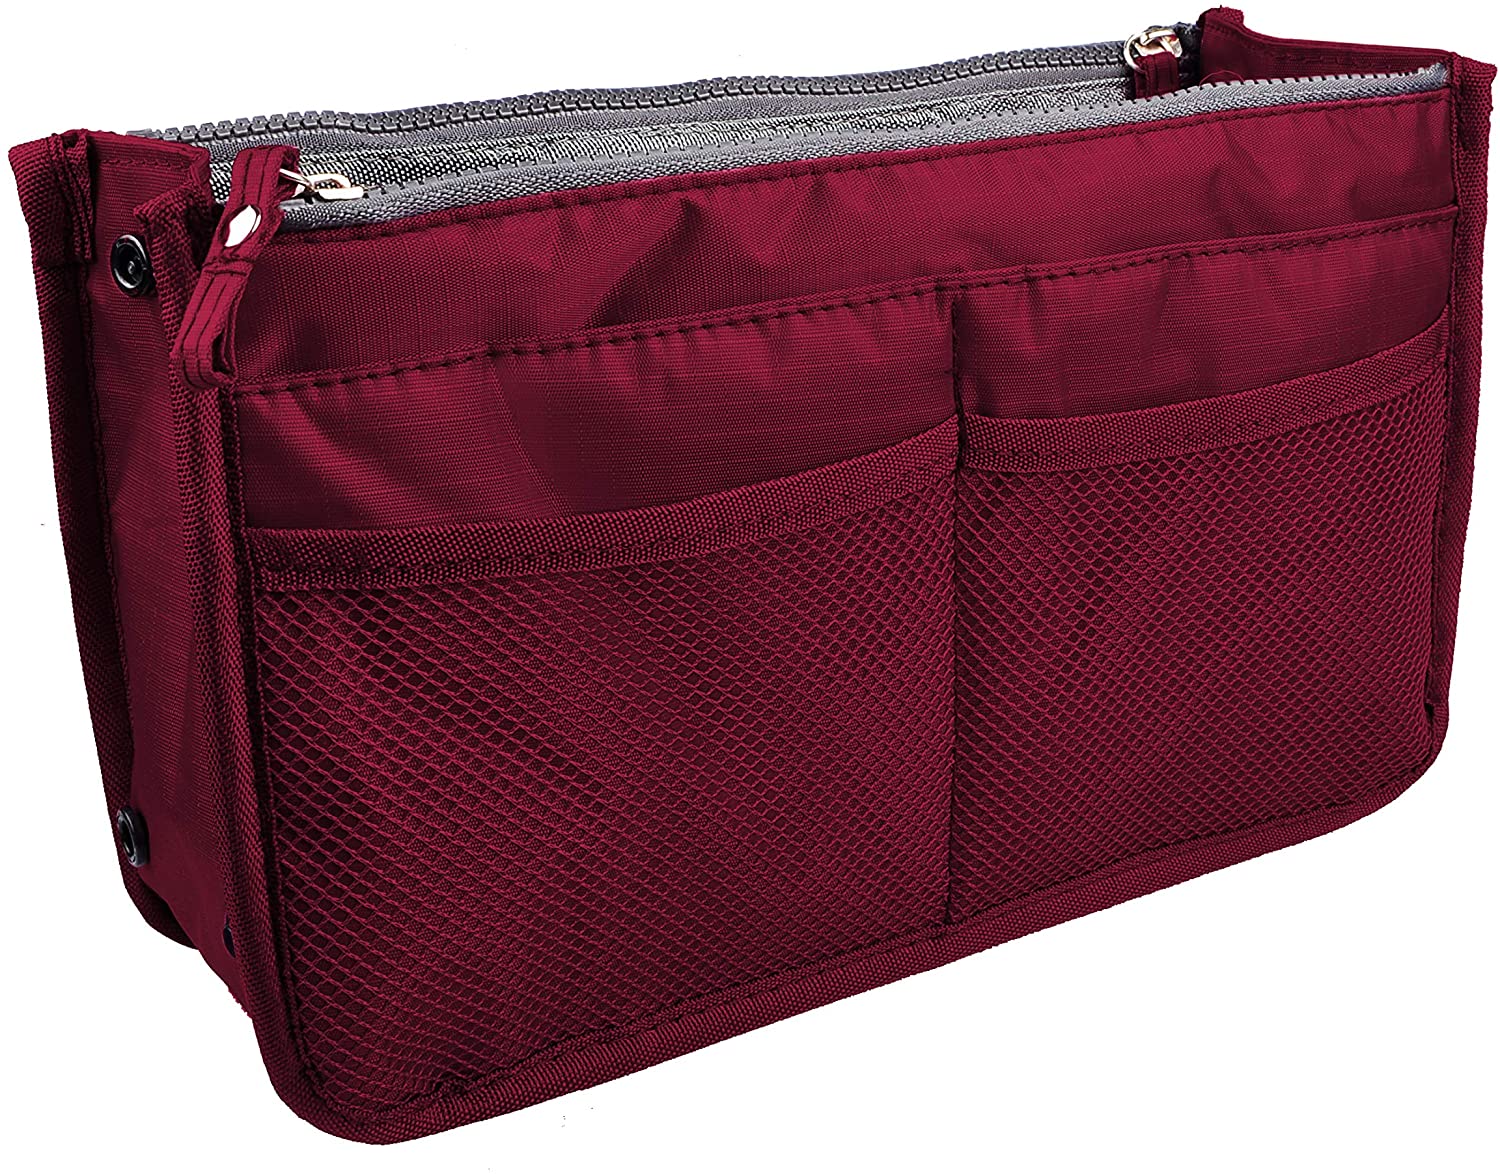 Vercord Updated Purse Handbag Organizer Insert Liner Bag in Bag 13 Pockets Purple Large